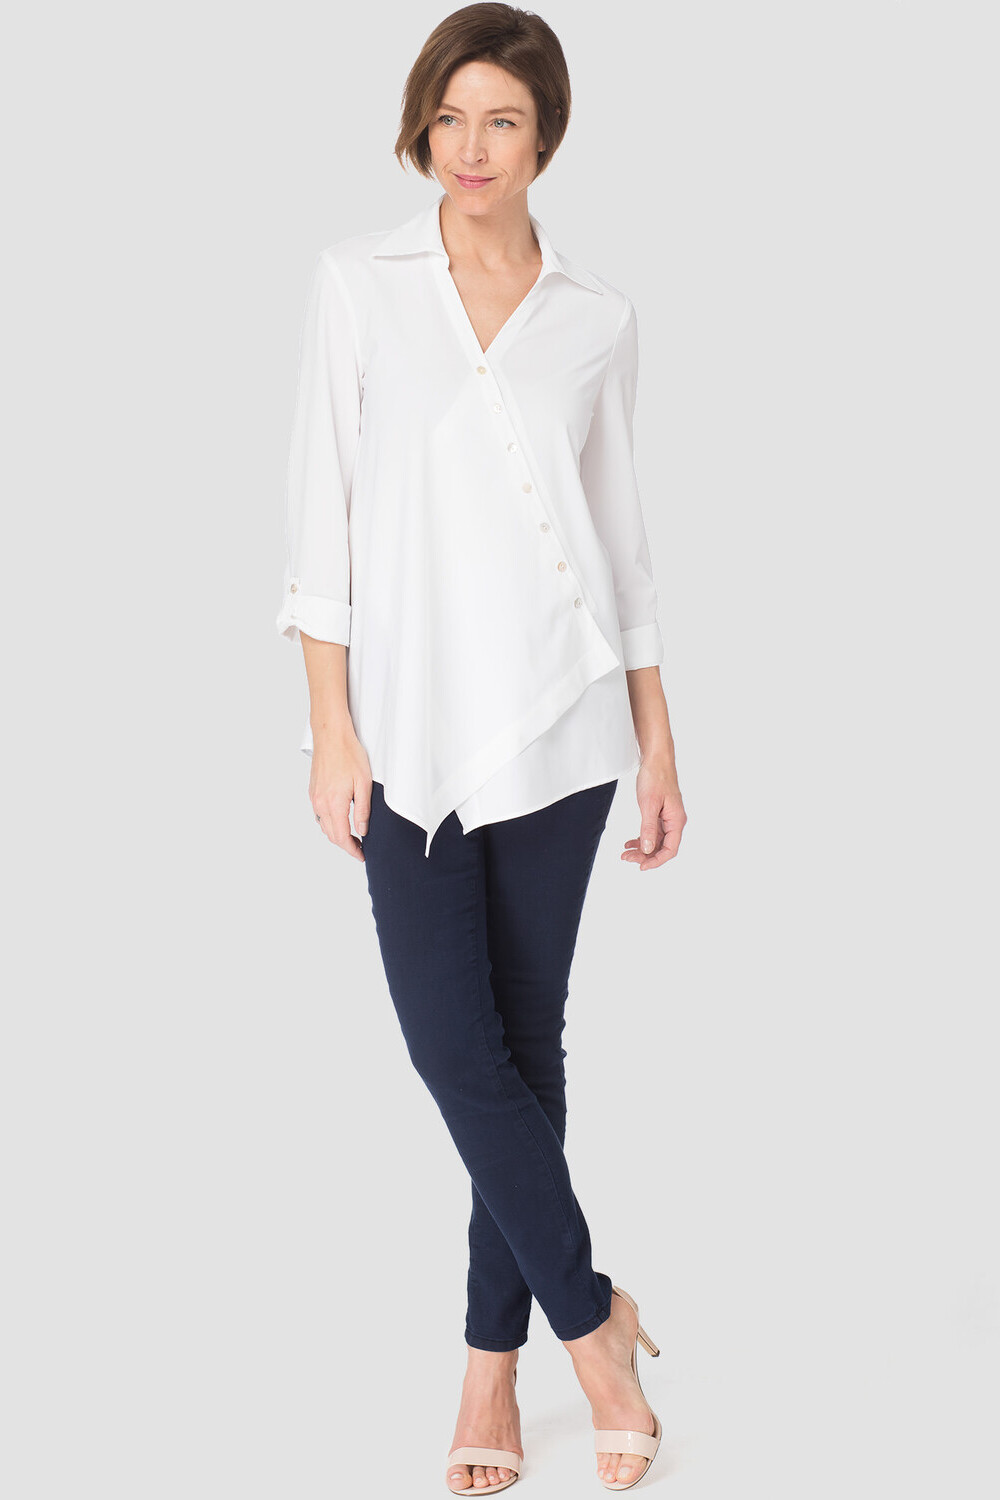 Joseph Ribkoff blouse style 181428. White